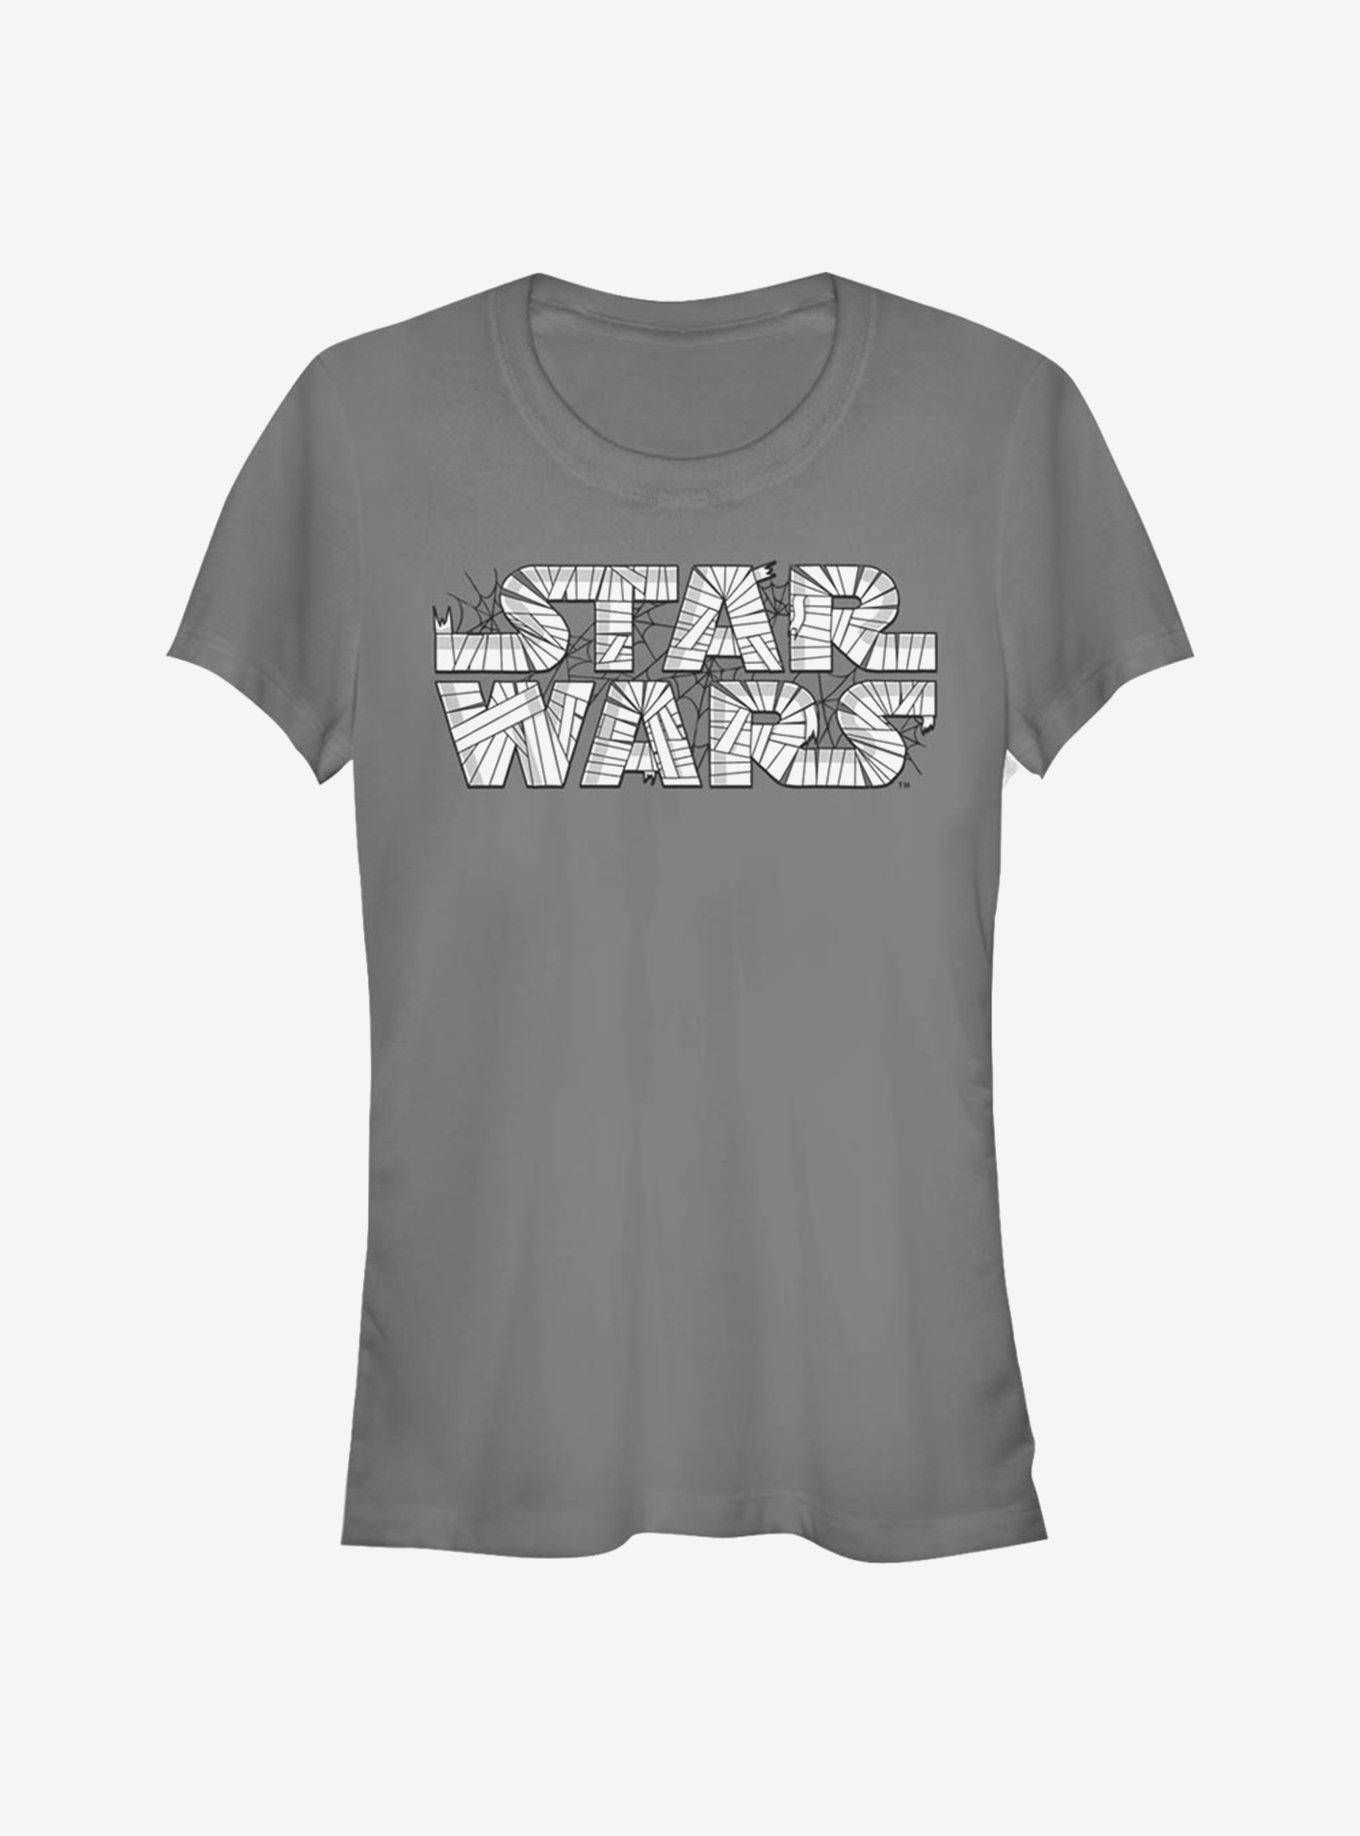 Star Wars Mummy Wrap Logo Girls T-Shirt